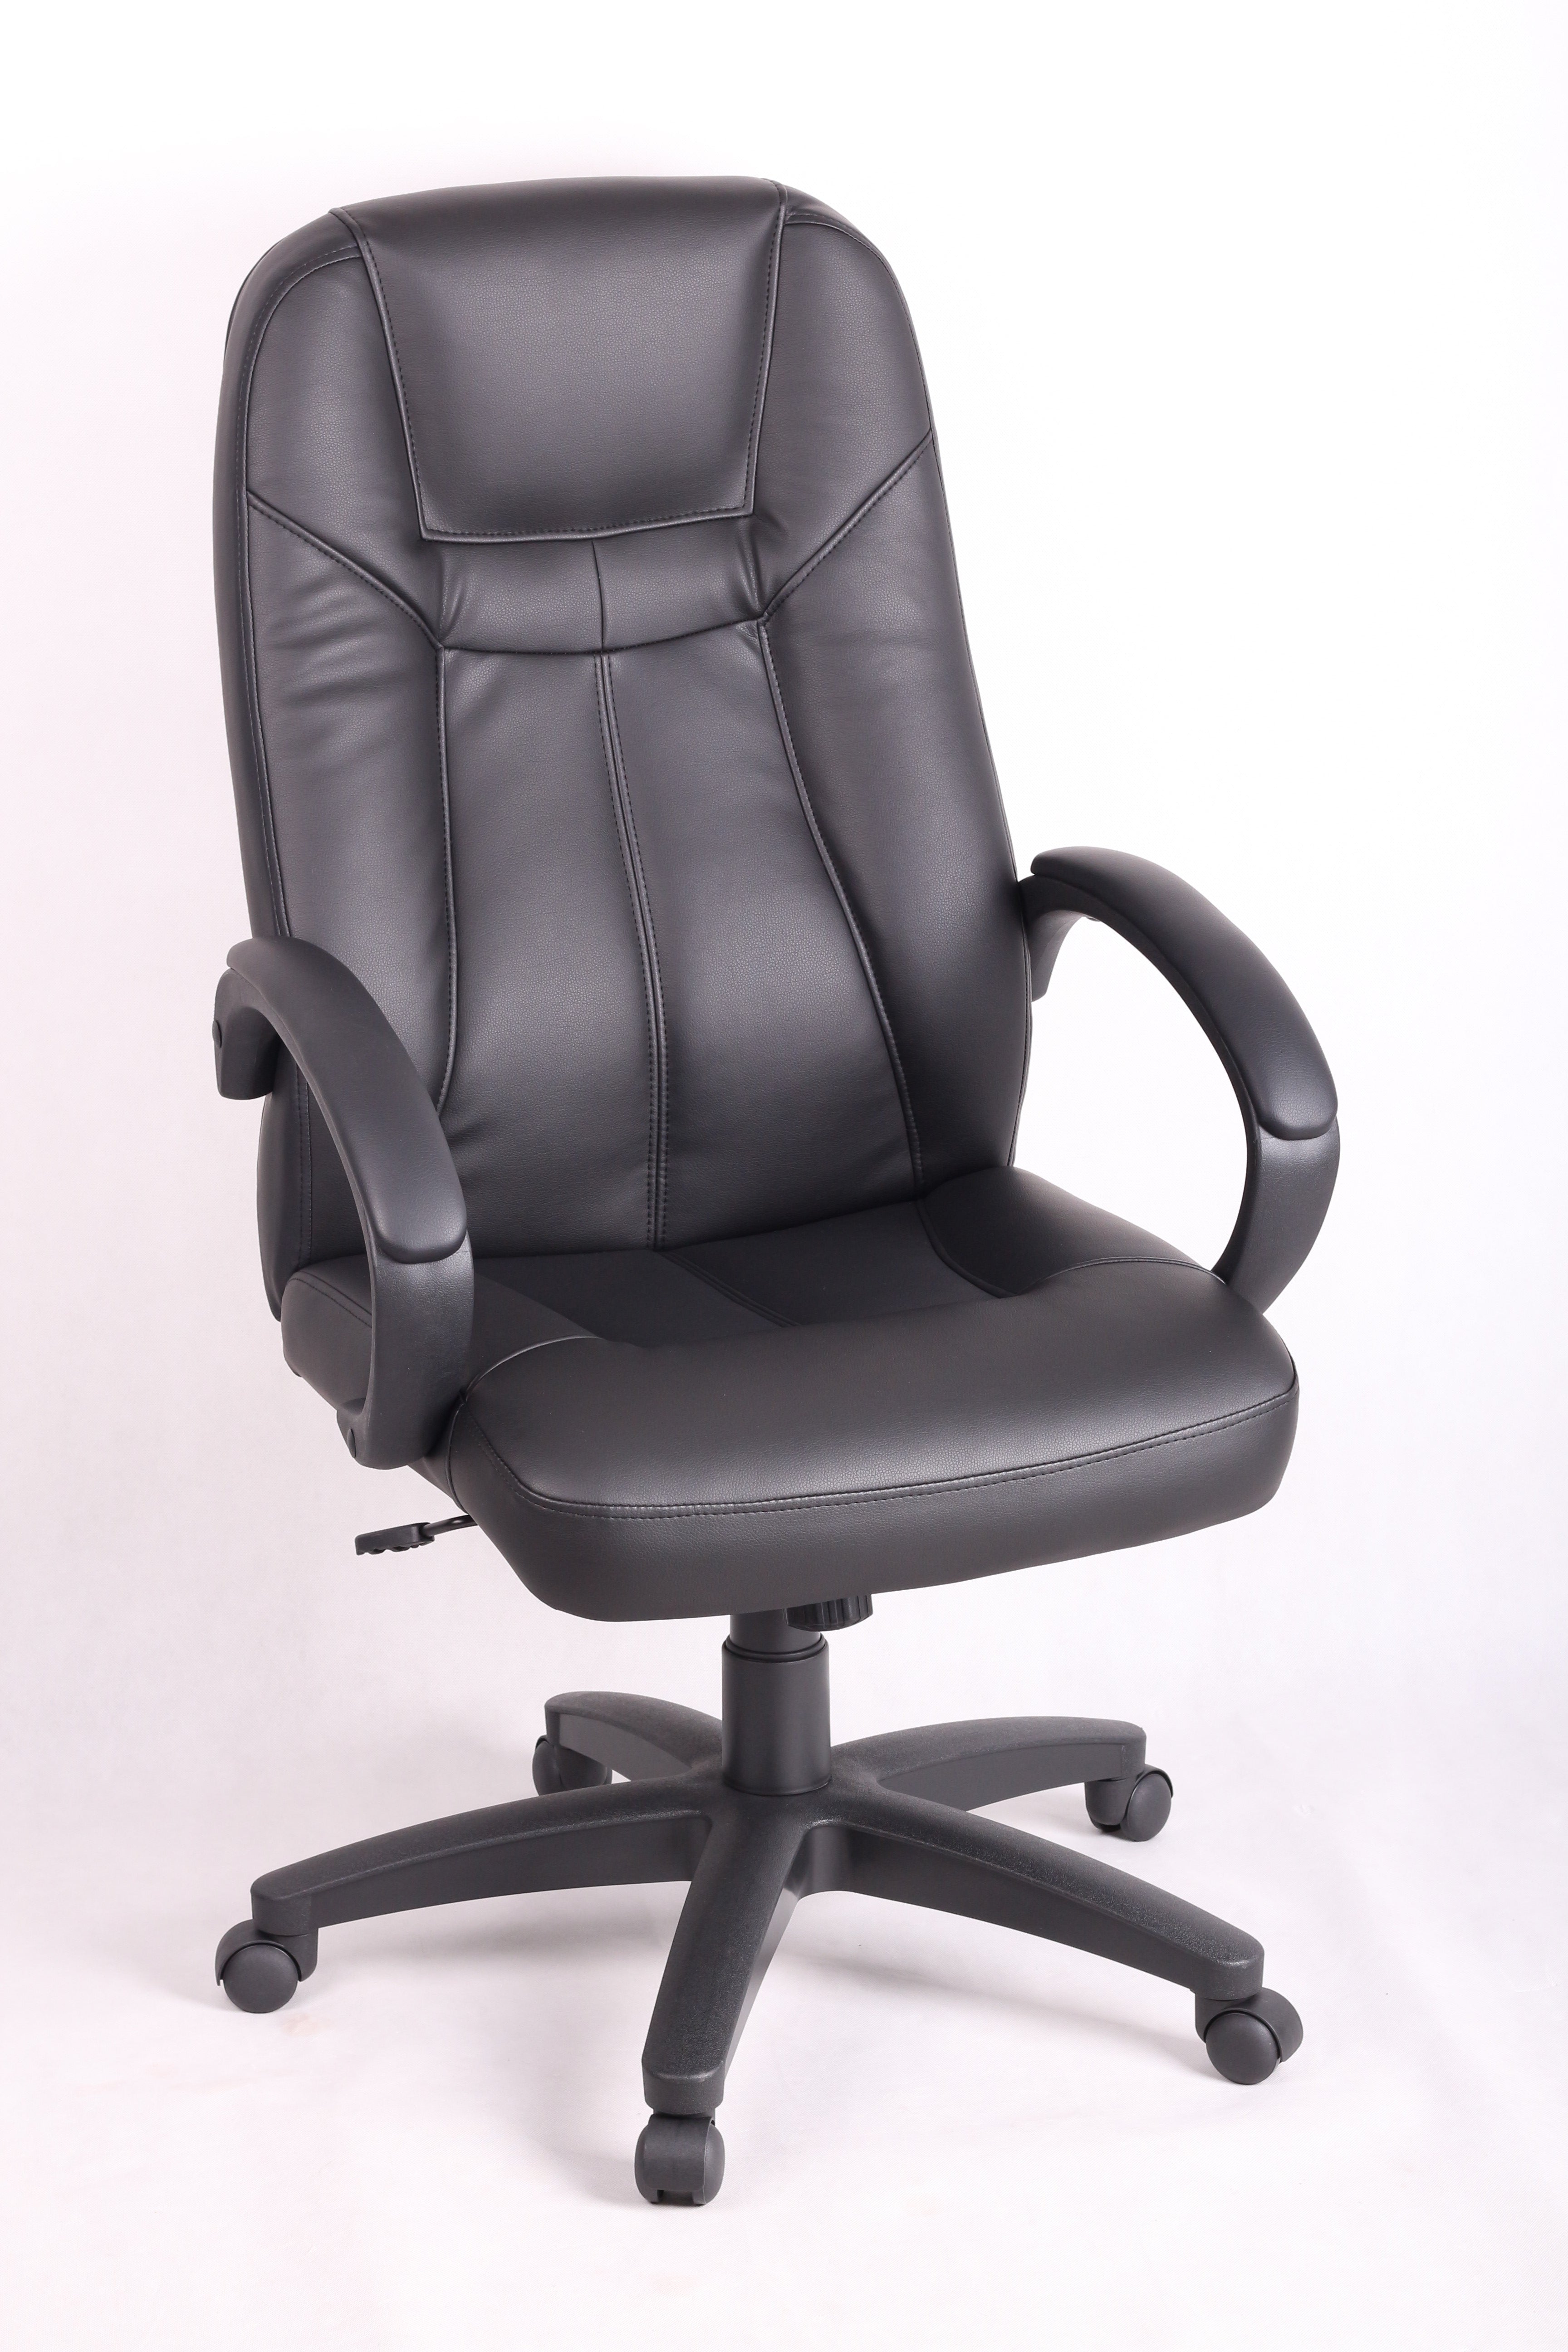 ViscoLogic TURDUS Ergonomic Adjustable Padded Armrest Home Office Computer Desk Chair (Black)